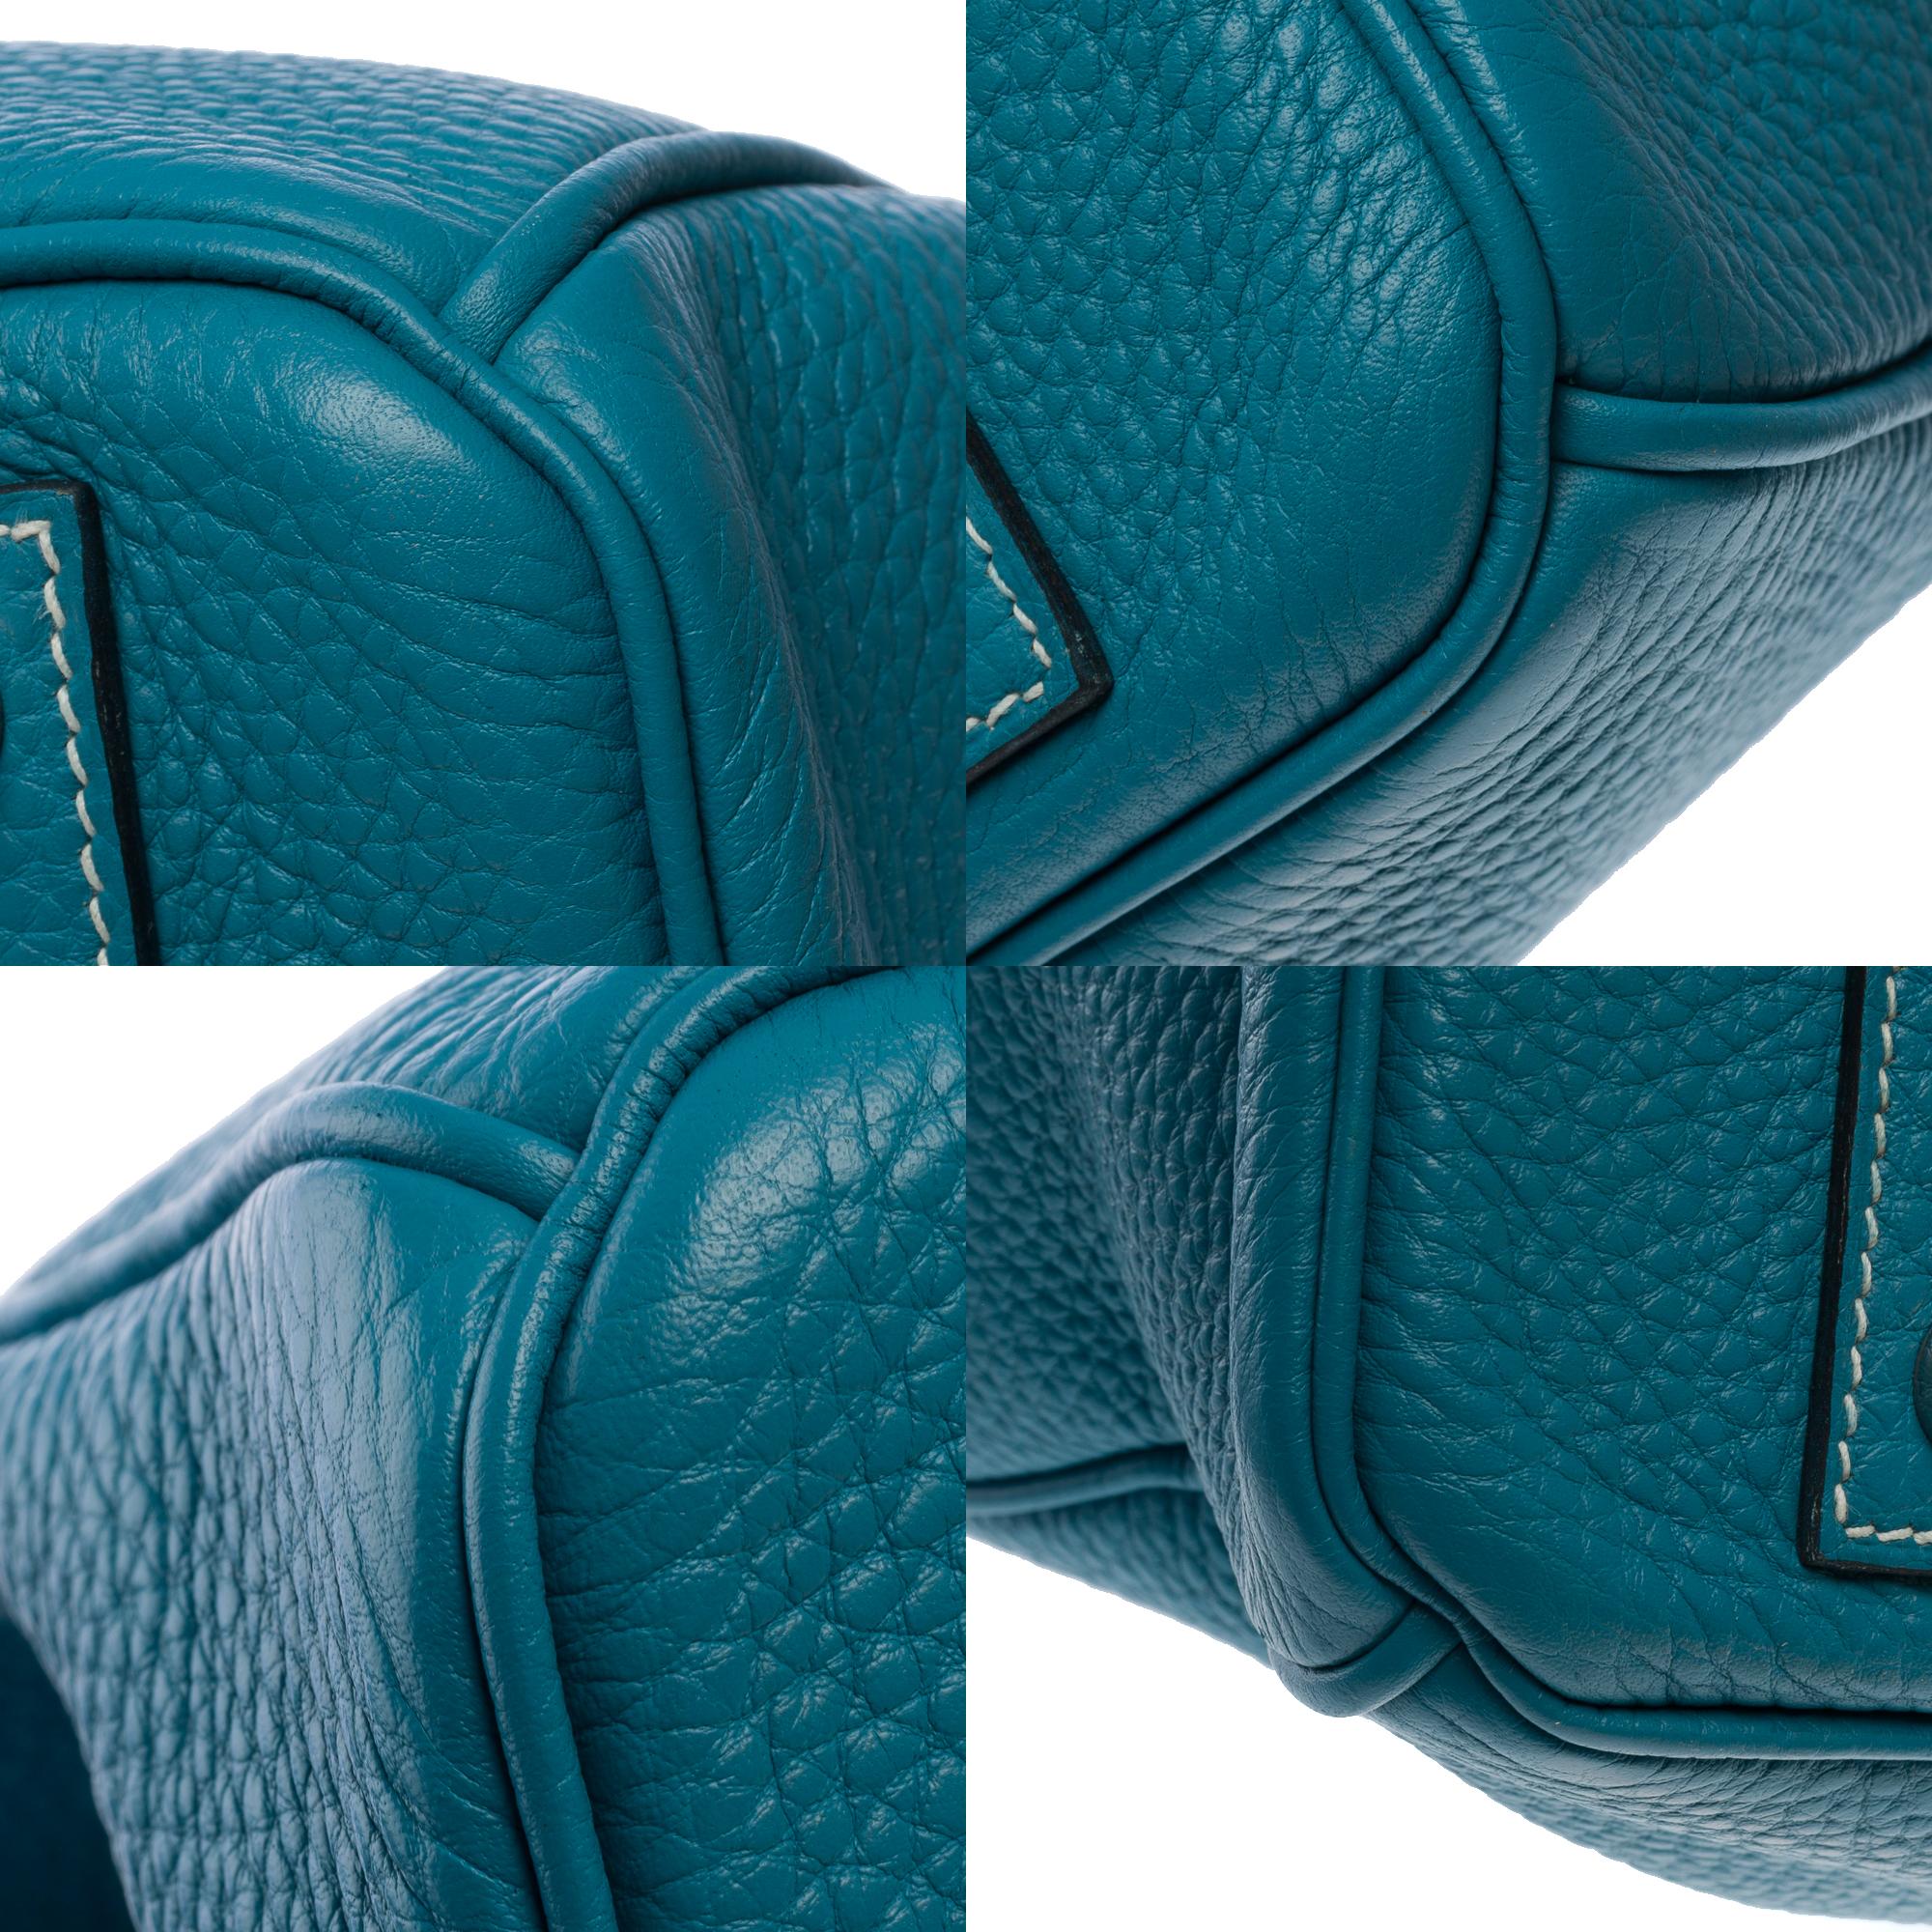 Stunning Hermes Birkin 40cm handbag in Blue Jean Togo leather, SHW 6